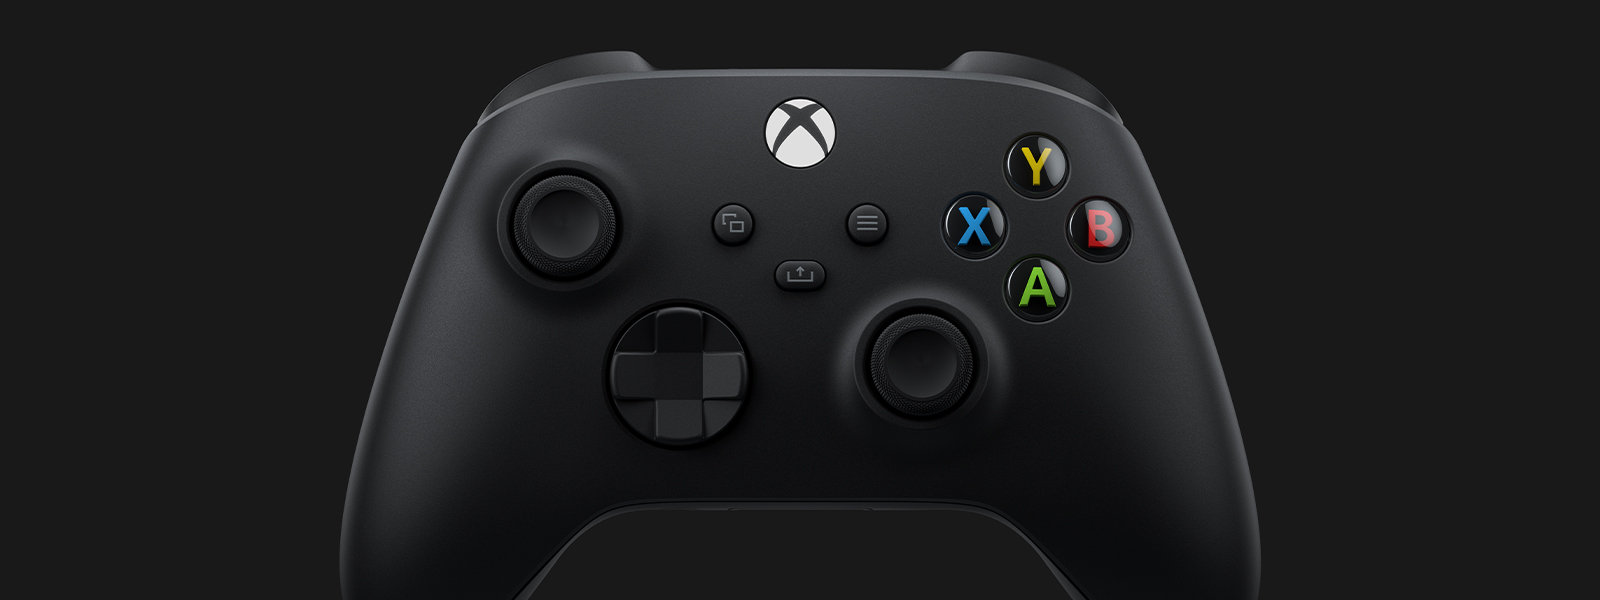 Xbox trådlös handkontroll